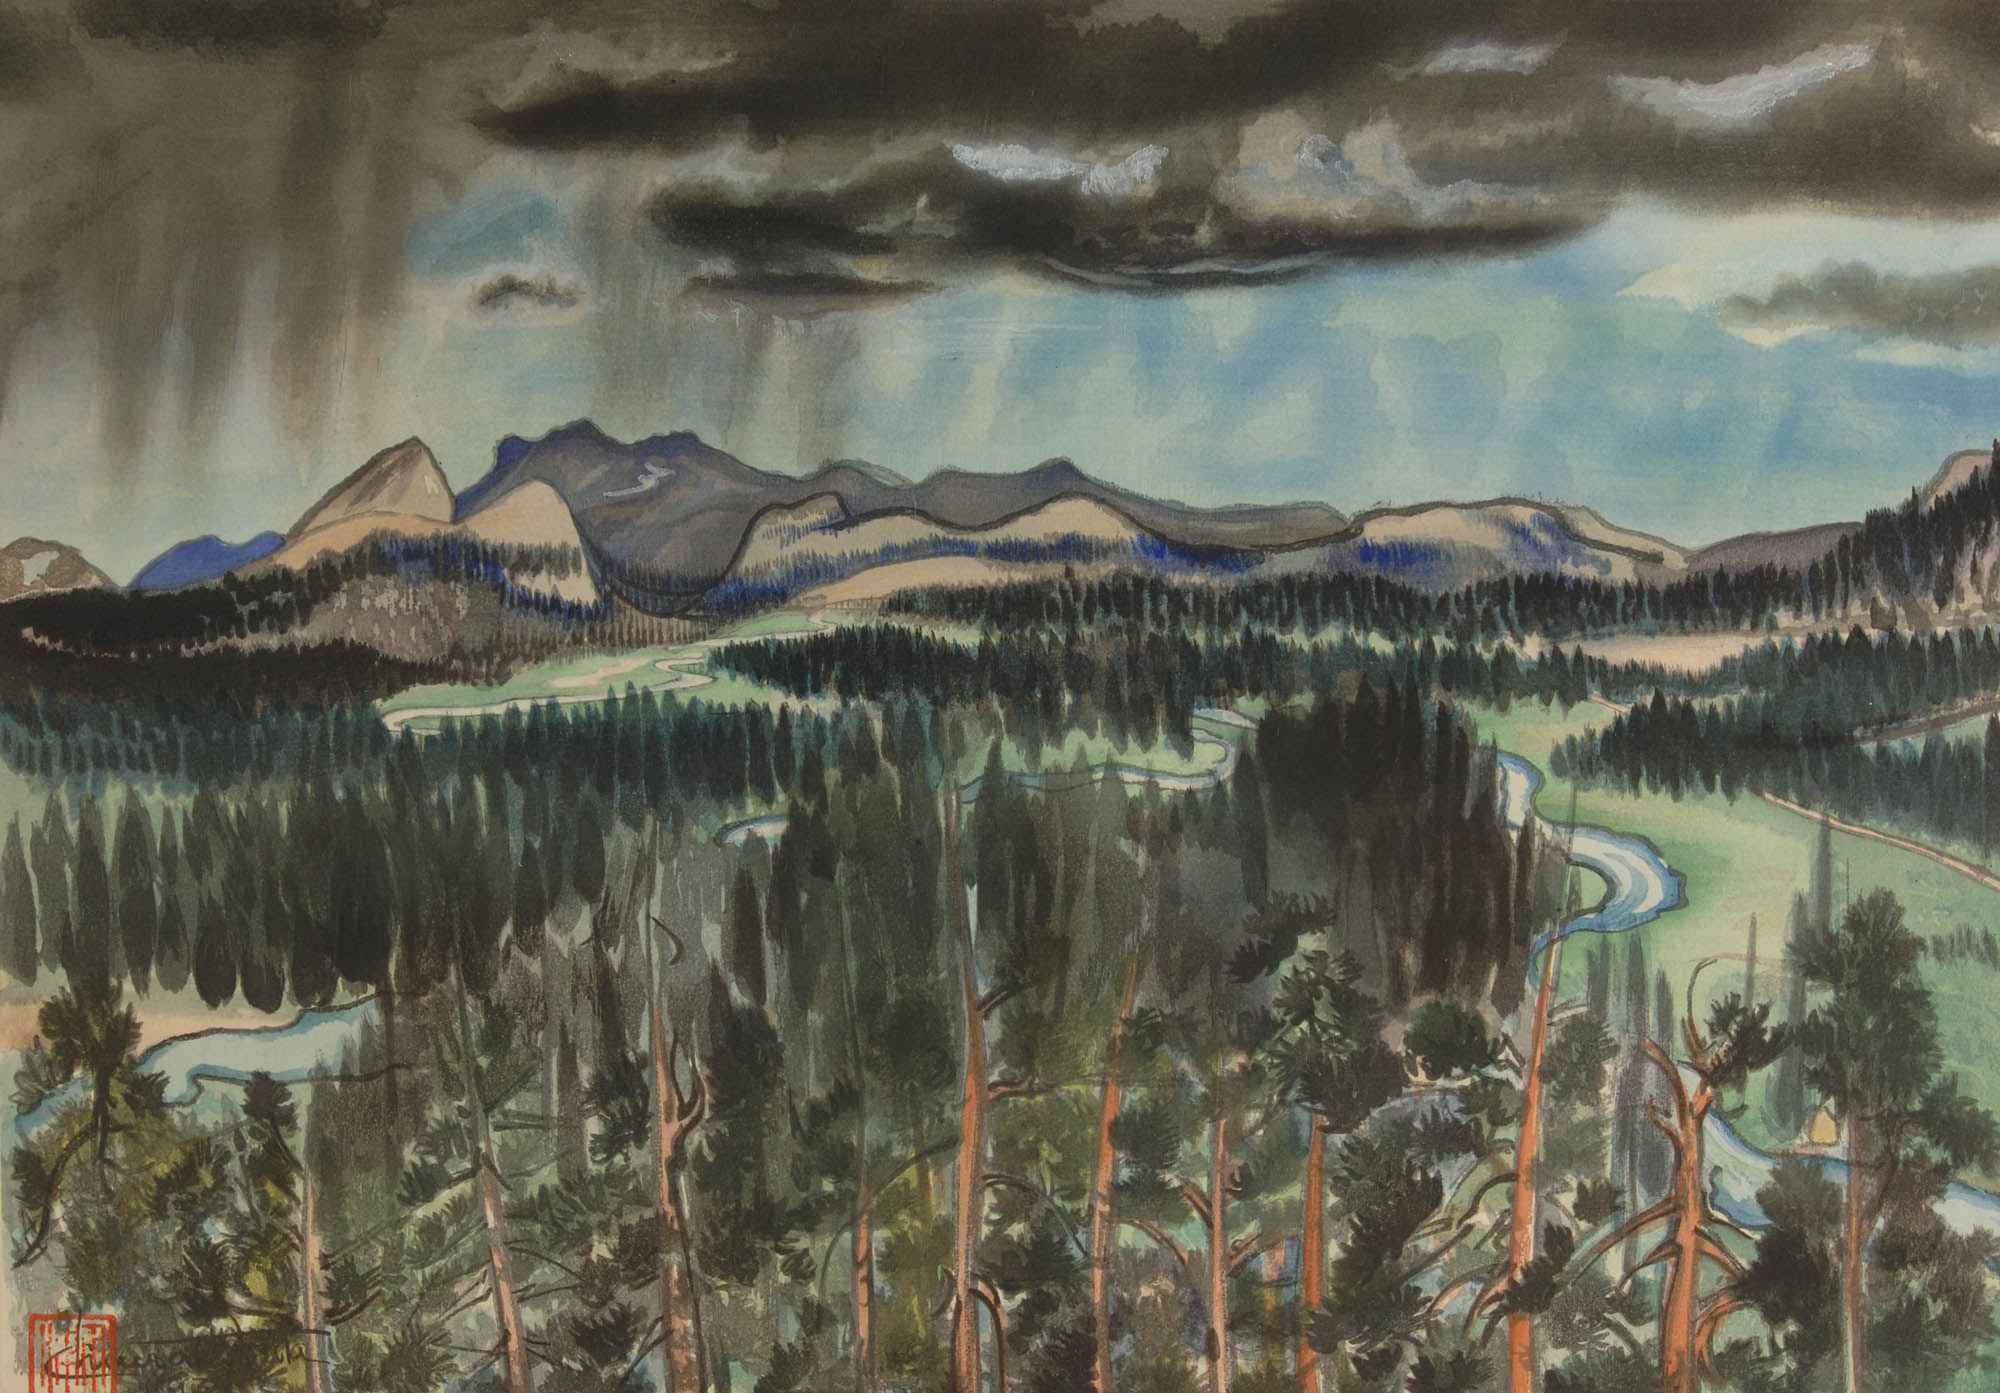 Painting Before Thunder Storm, Tuolumn [sic] Meadow, High Sierra, Calif., U.S.A.